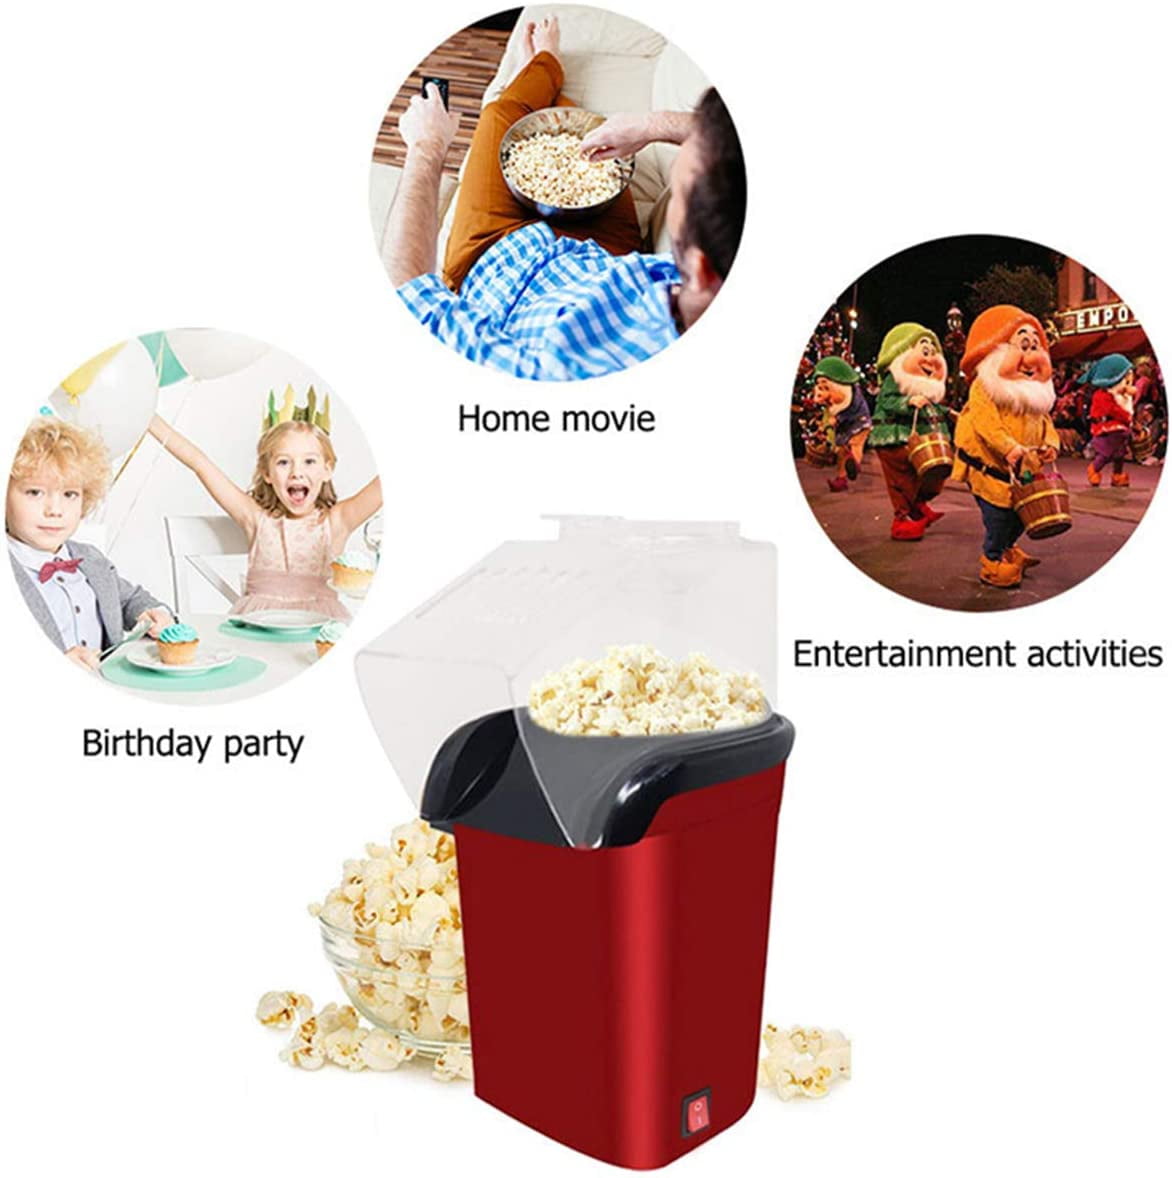 Mini Popcorn Machine Oil Healthy Hot Air Popcorn Maker For Home Party Eu✿